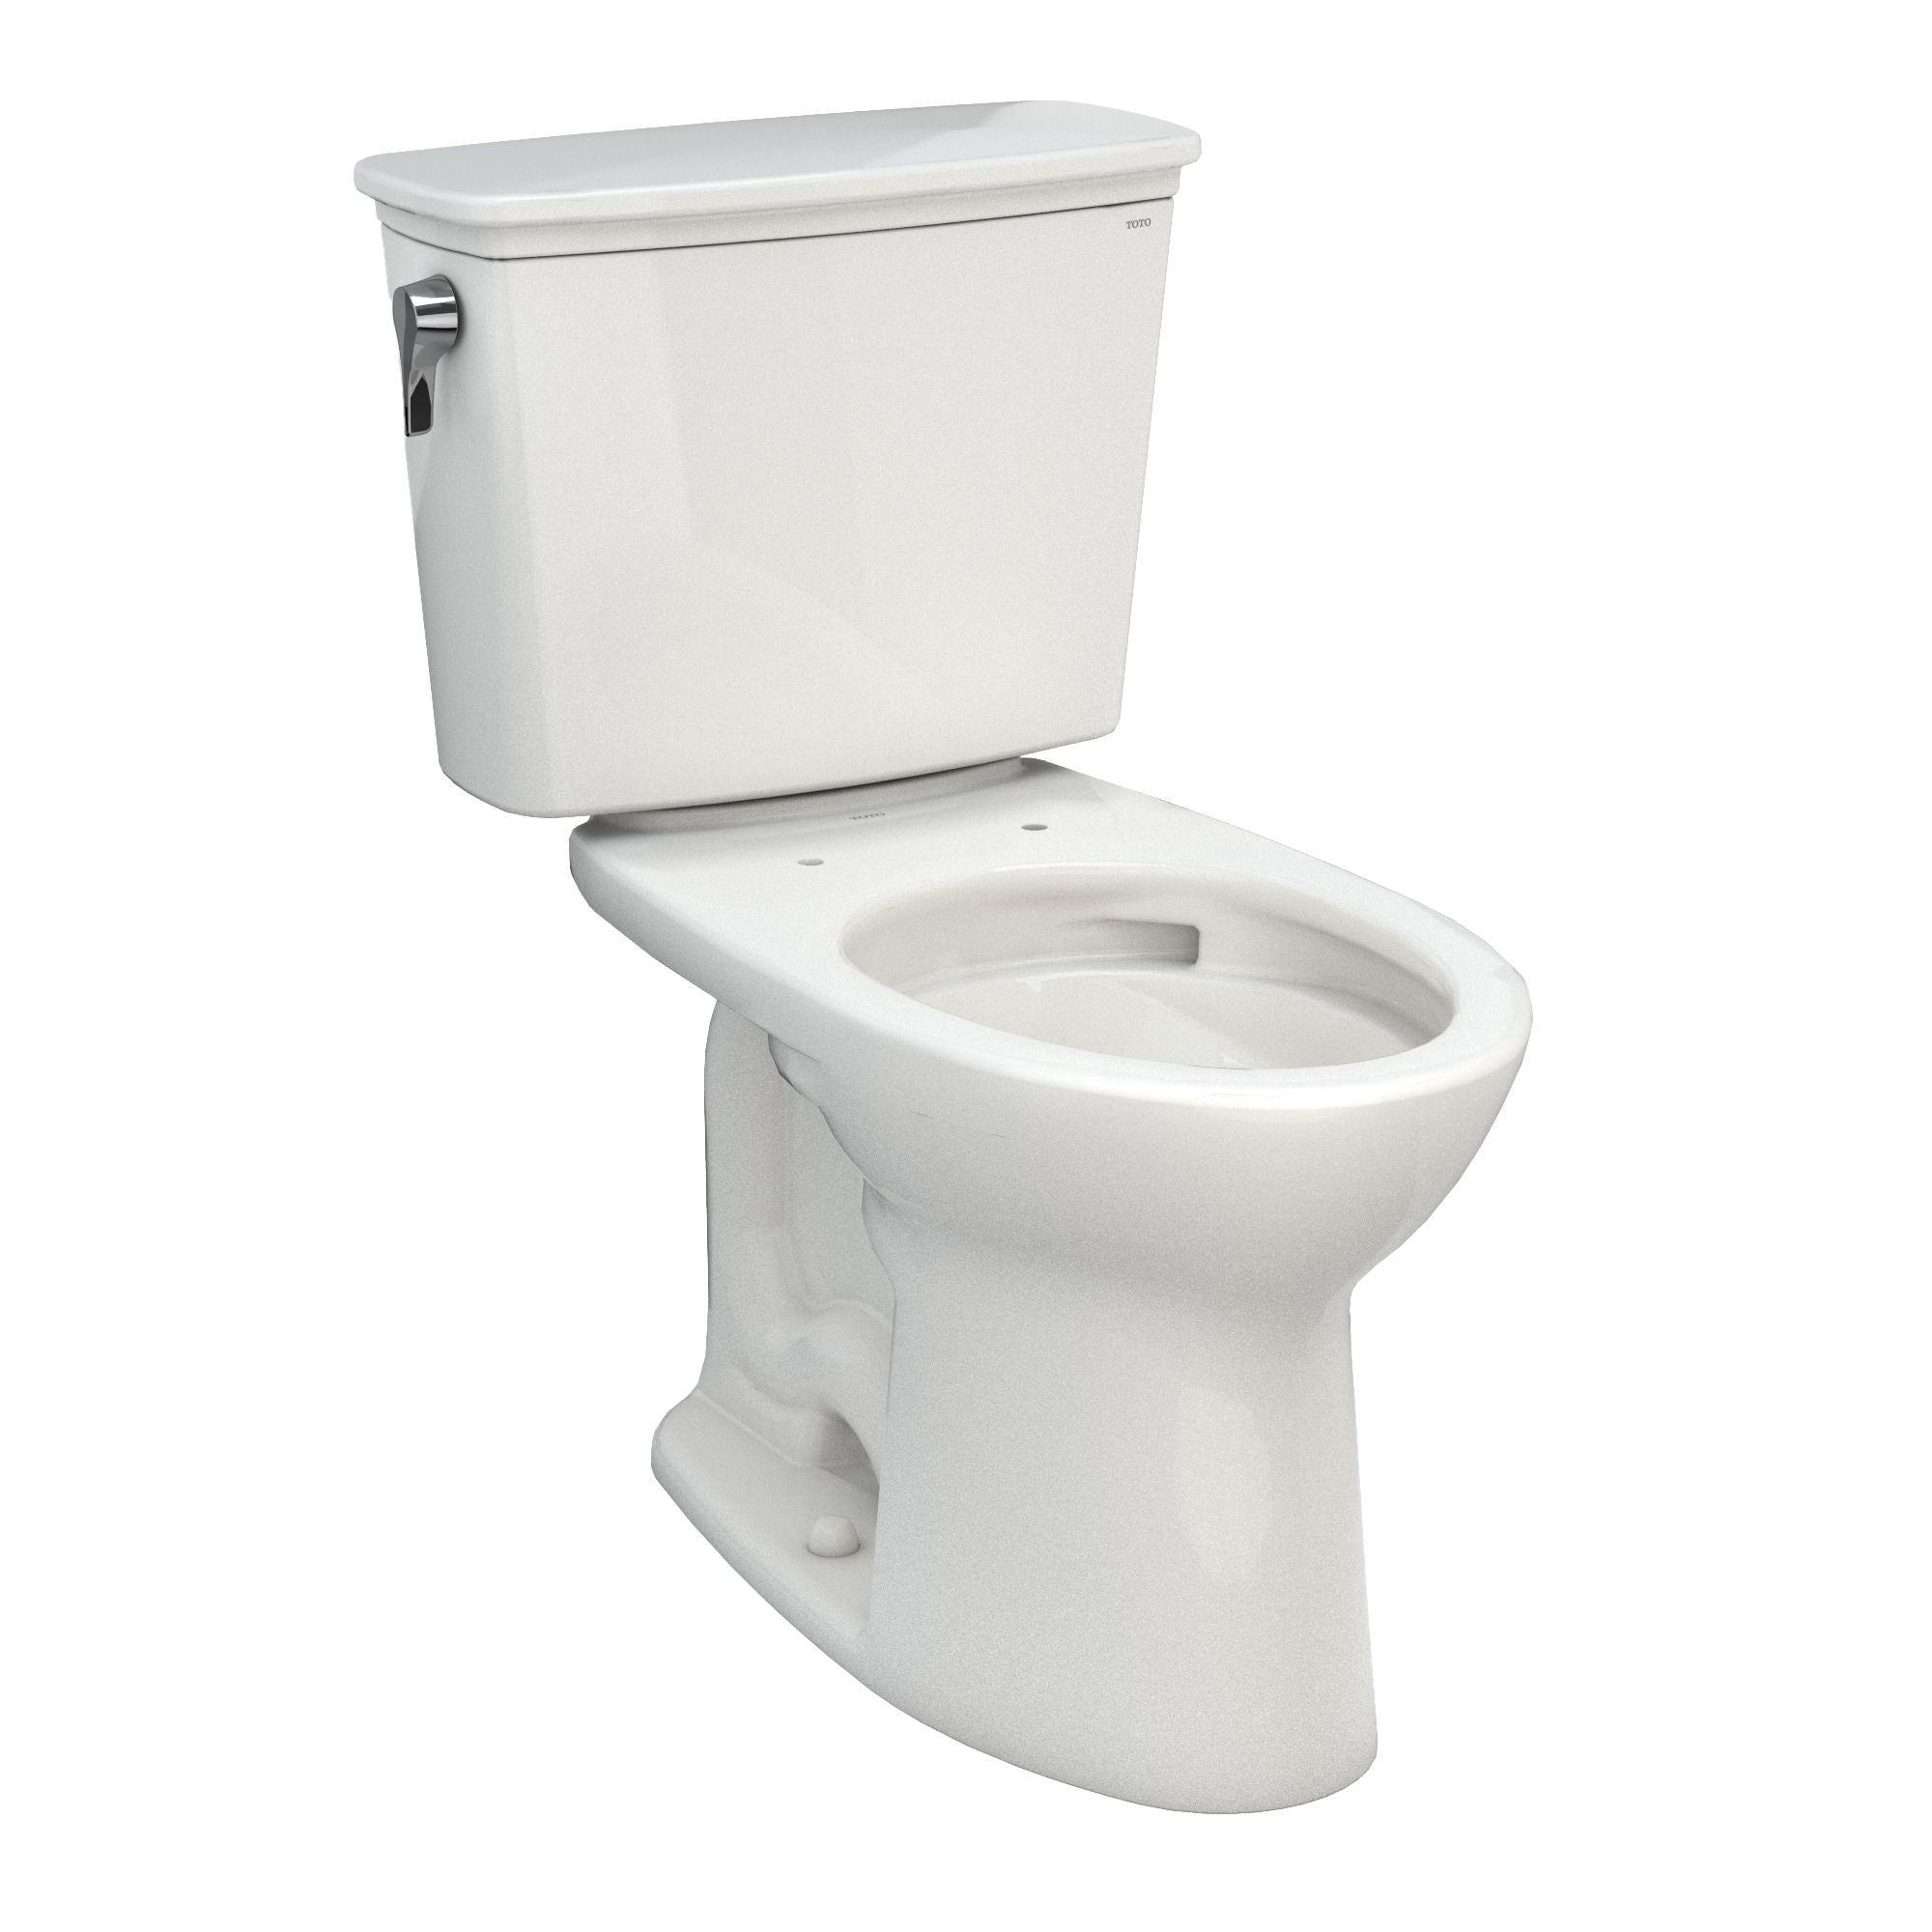 Toto Drake Transitional Two-piece Toilet 1.28 GPF Elongated Bowl